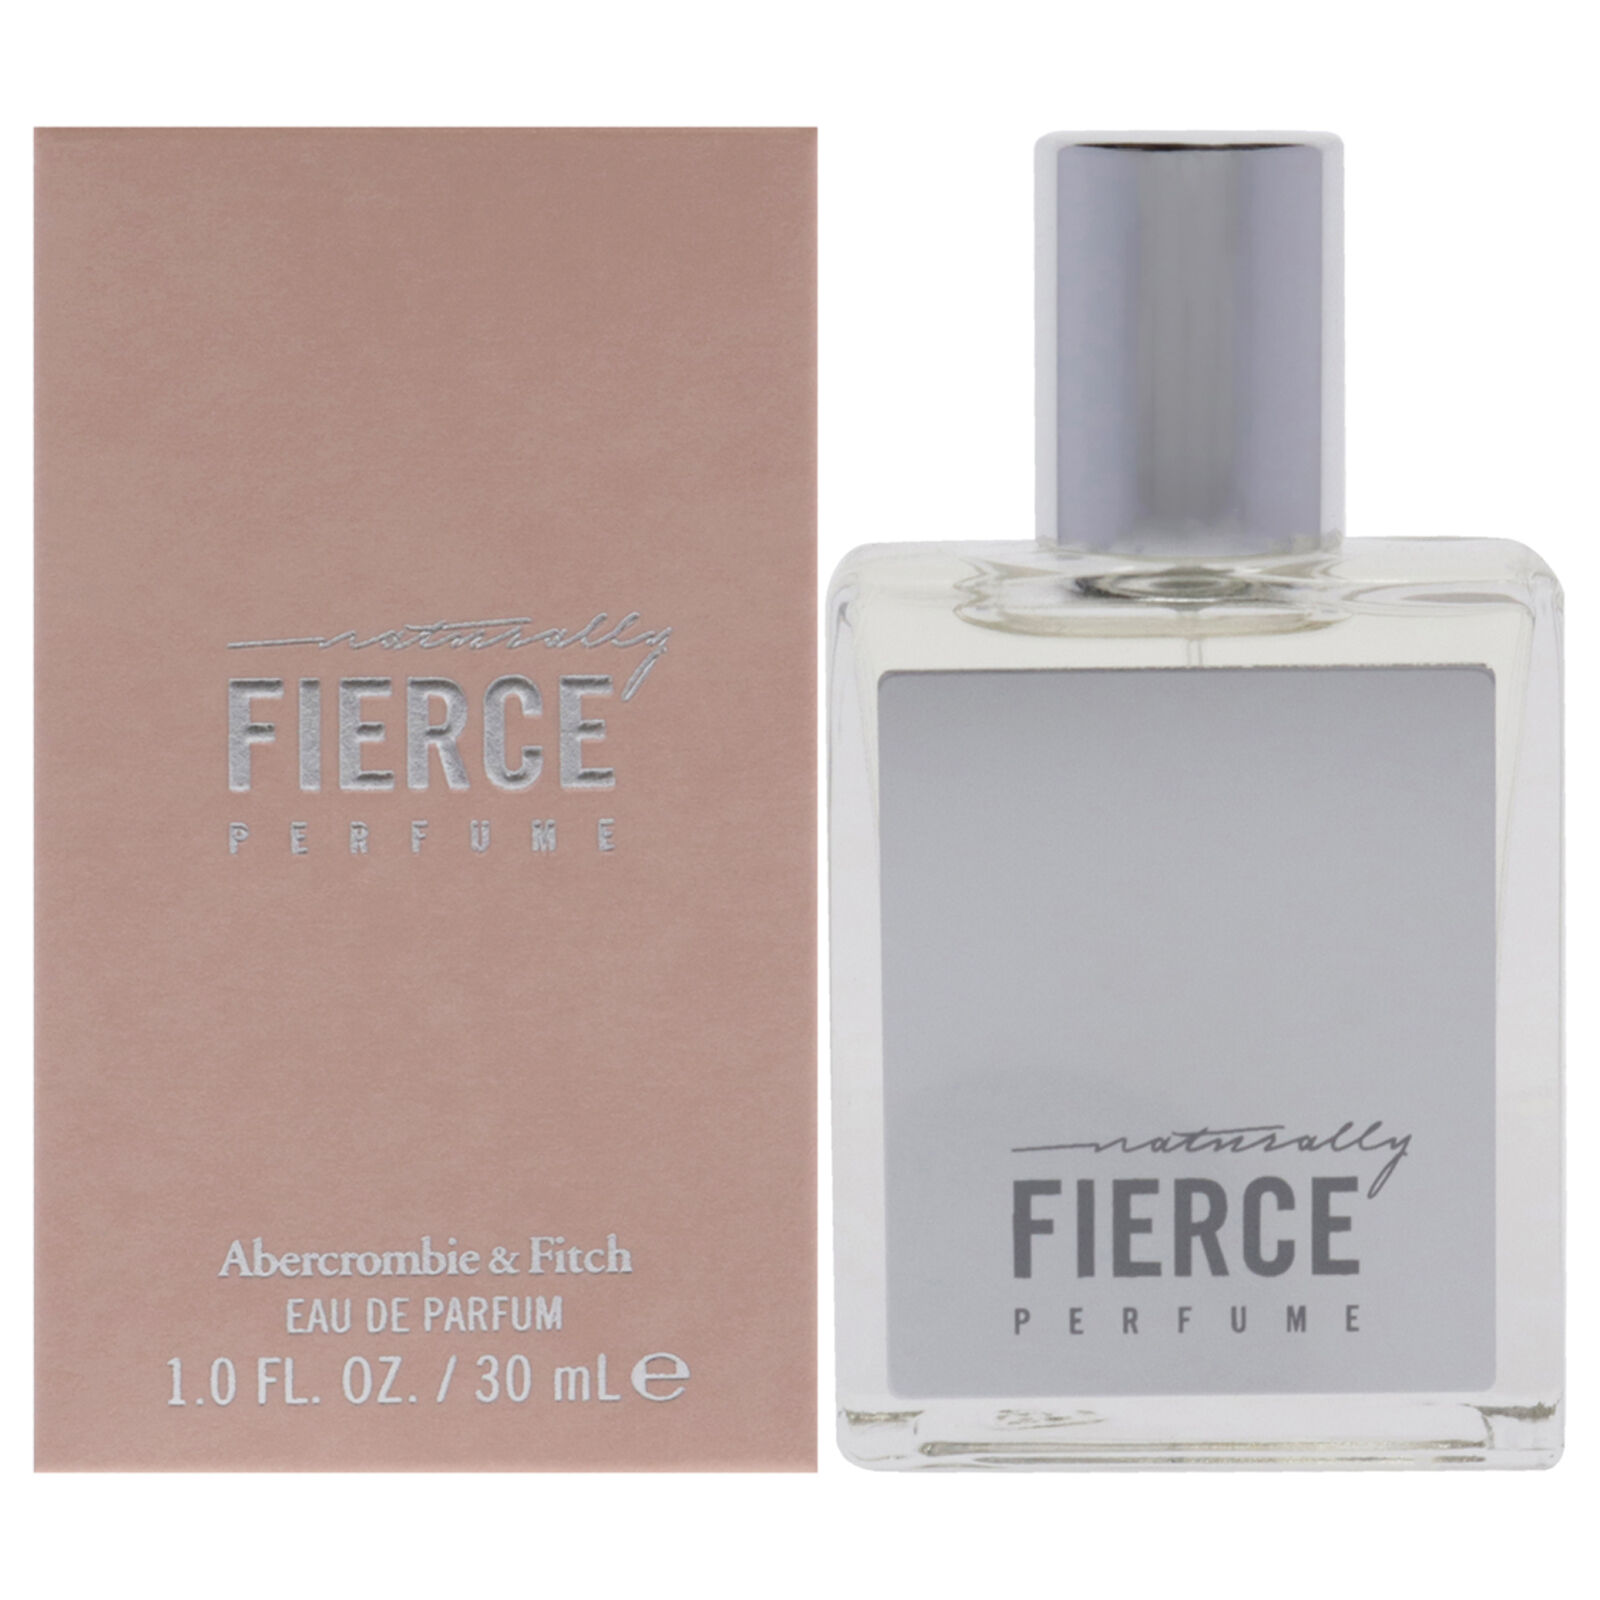 Вода парфюмерная Abercrombie & Fitch Naturally Fierce женская, 30 мл